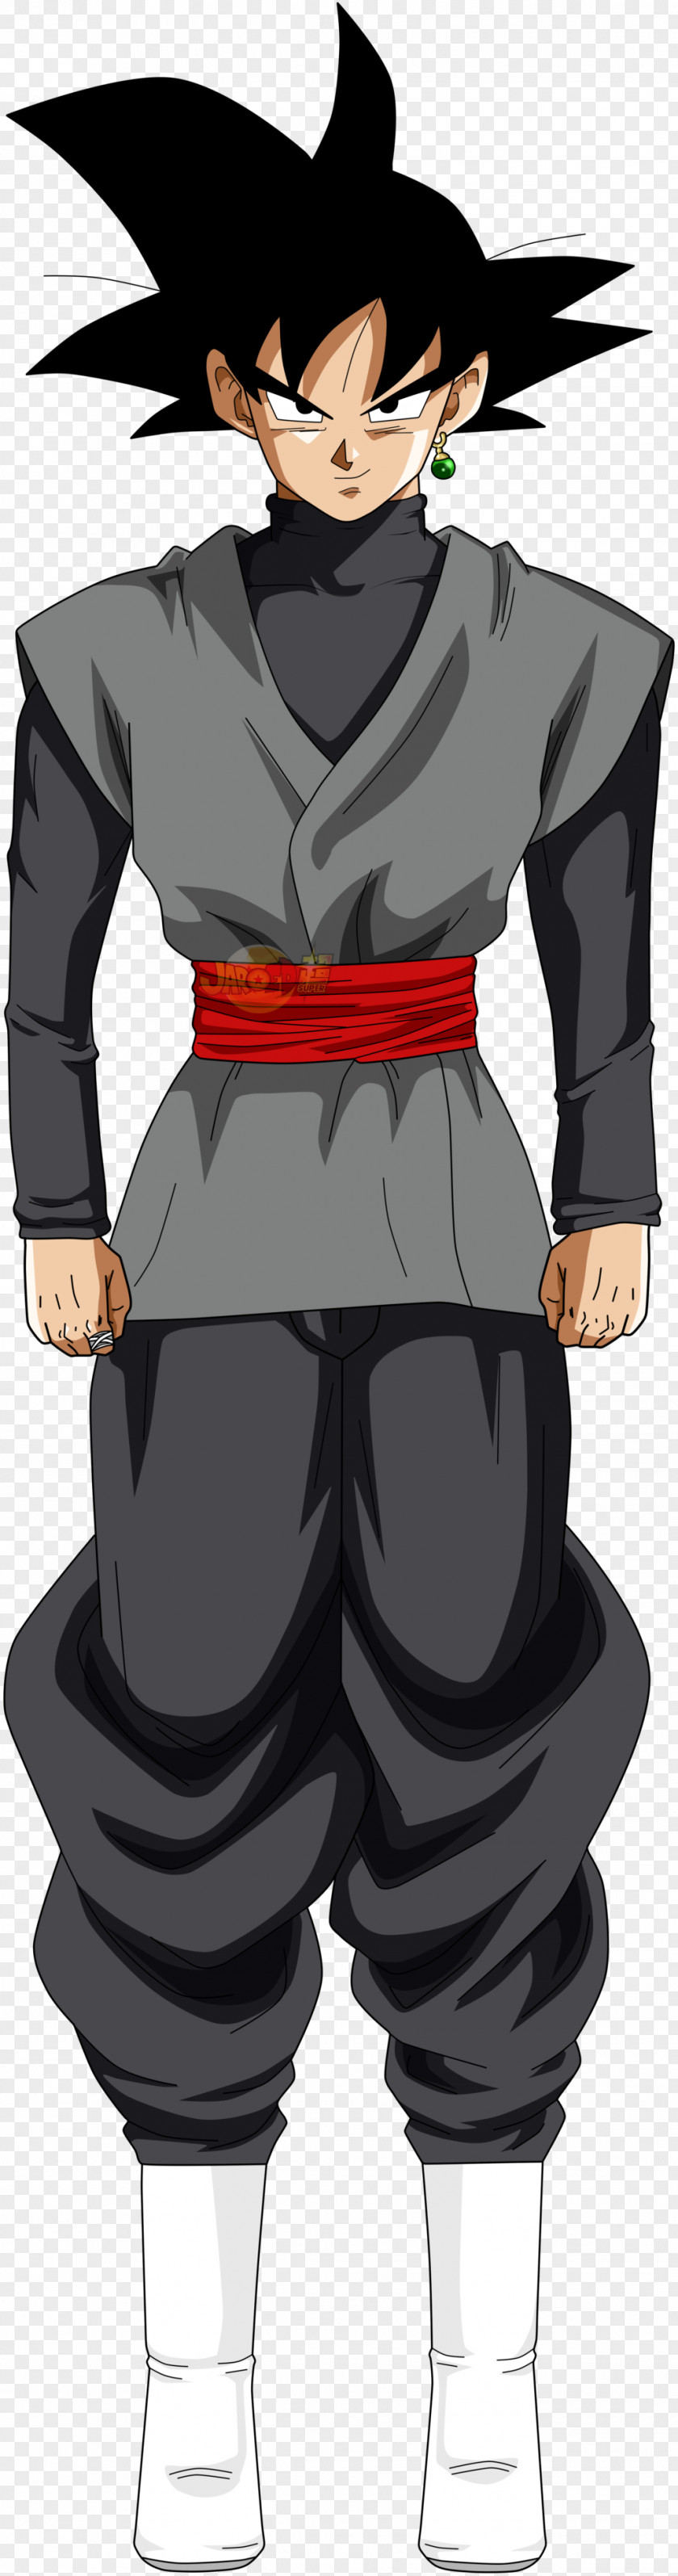 Goku Black Gohan Trunks Super Saiyan PNG